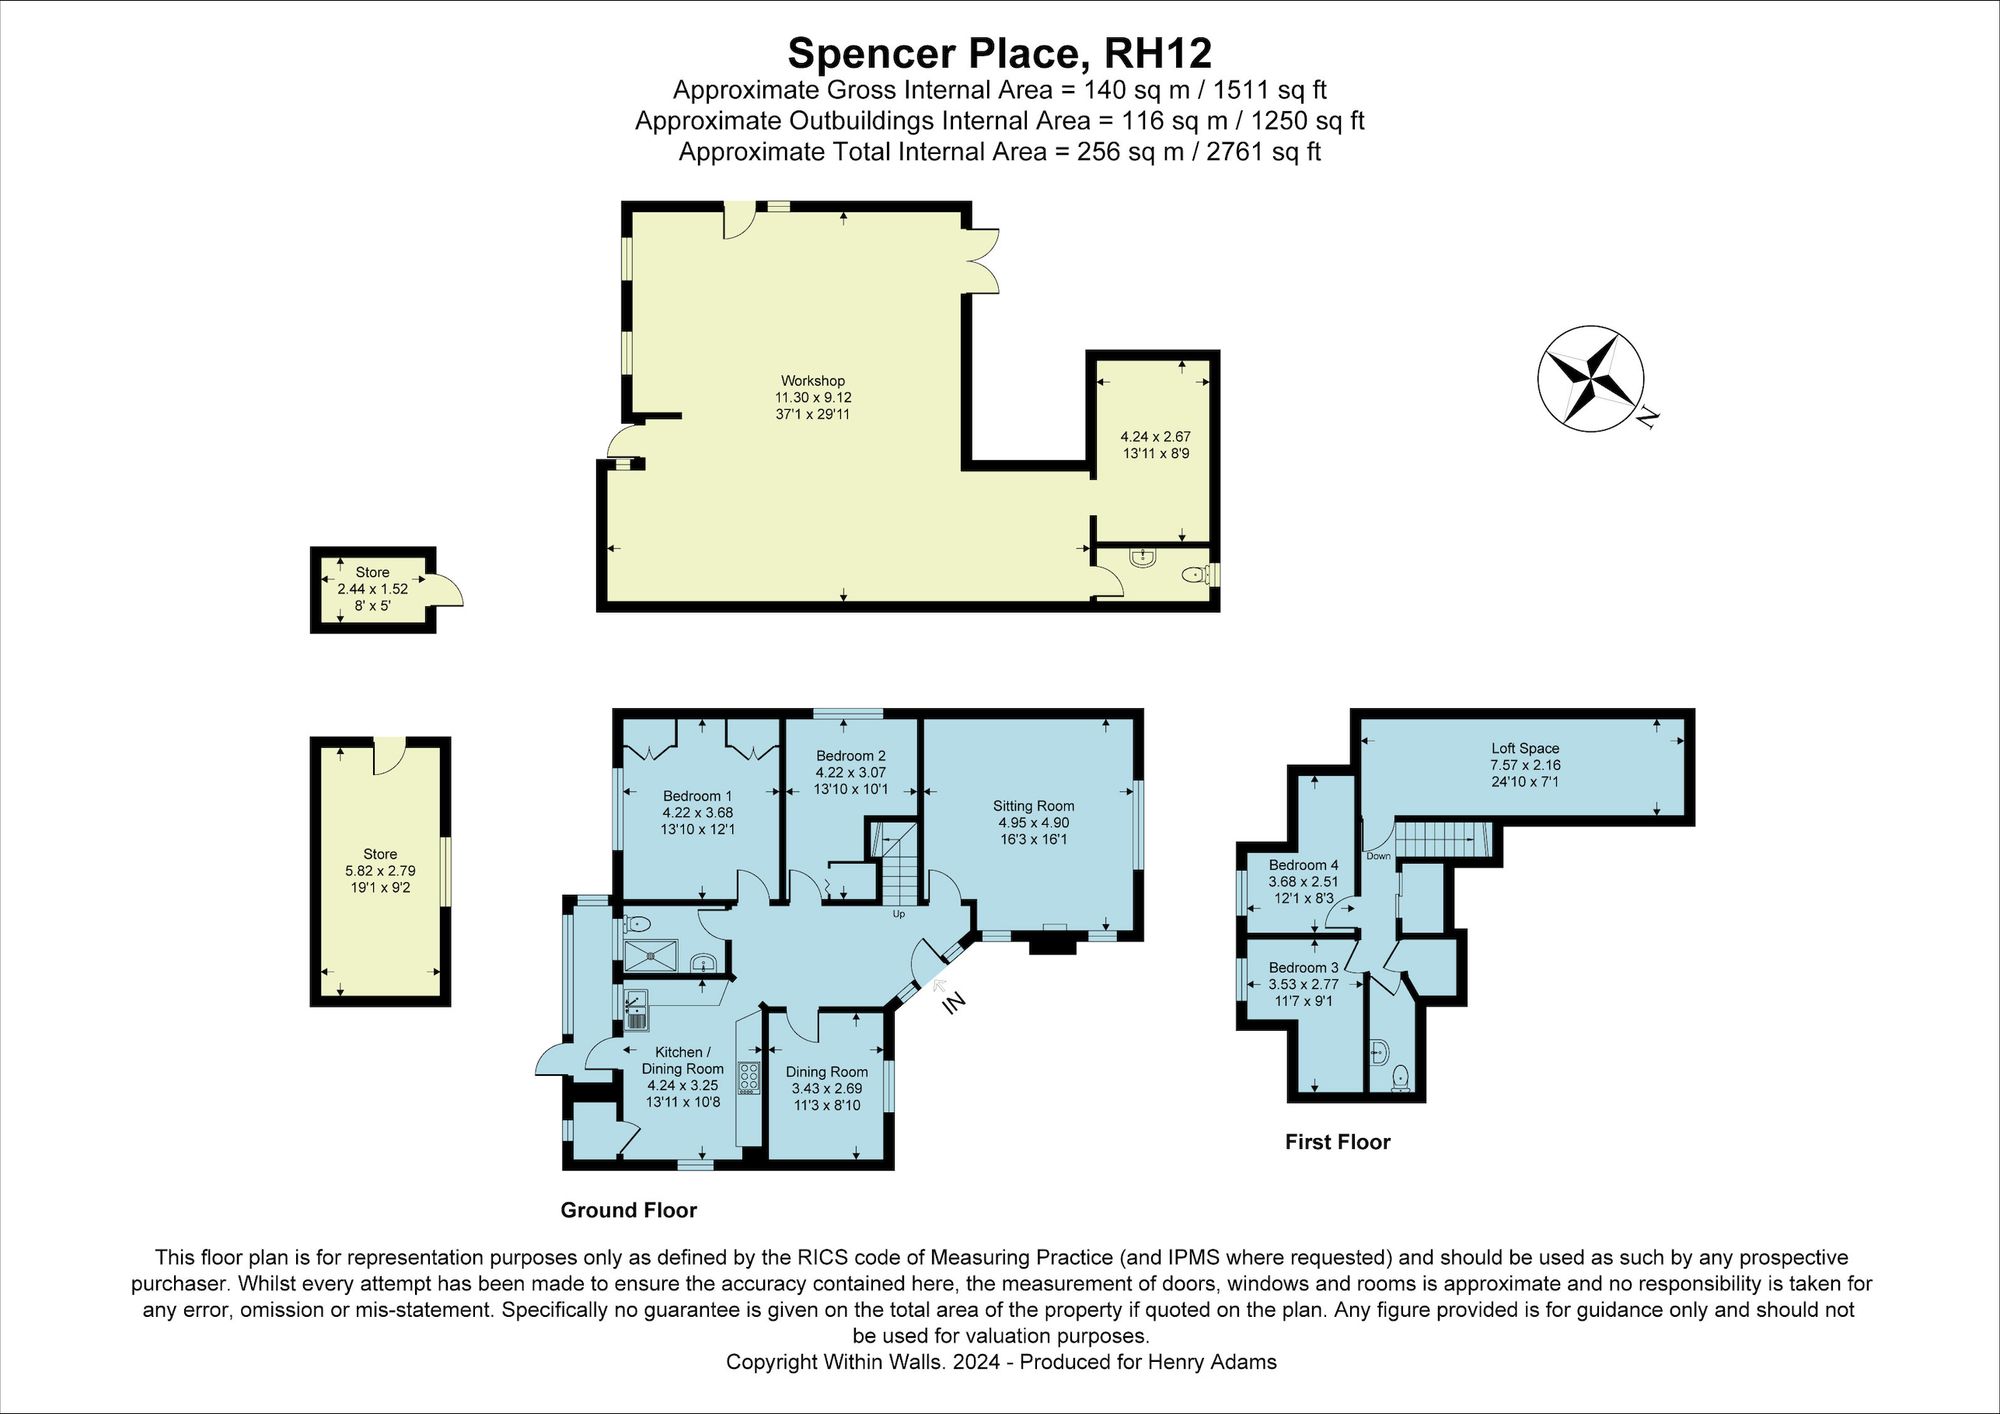 Spencers Place, Horsham, RH12 floorplans